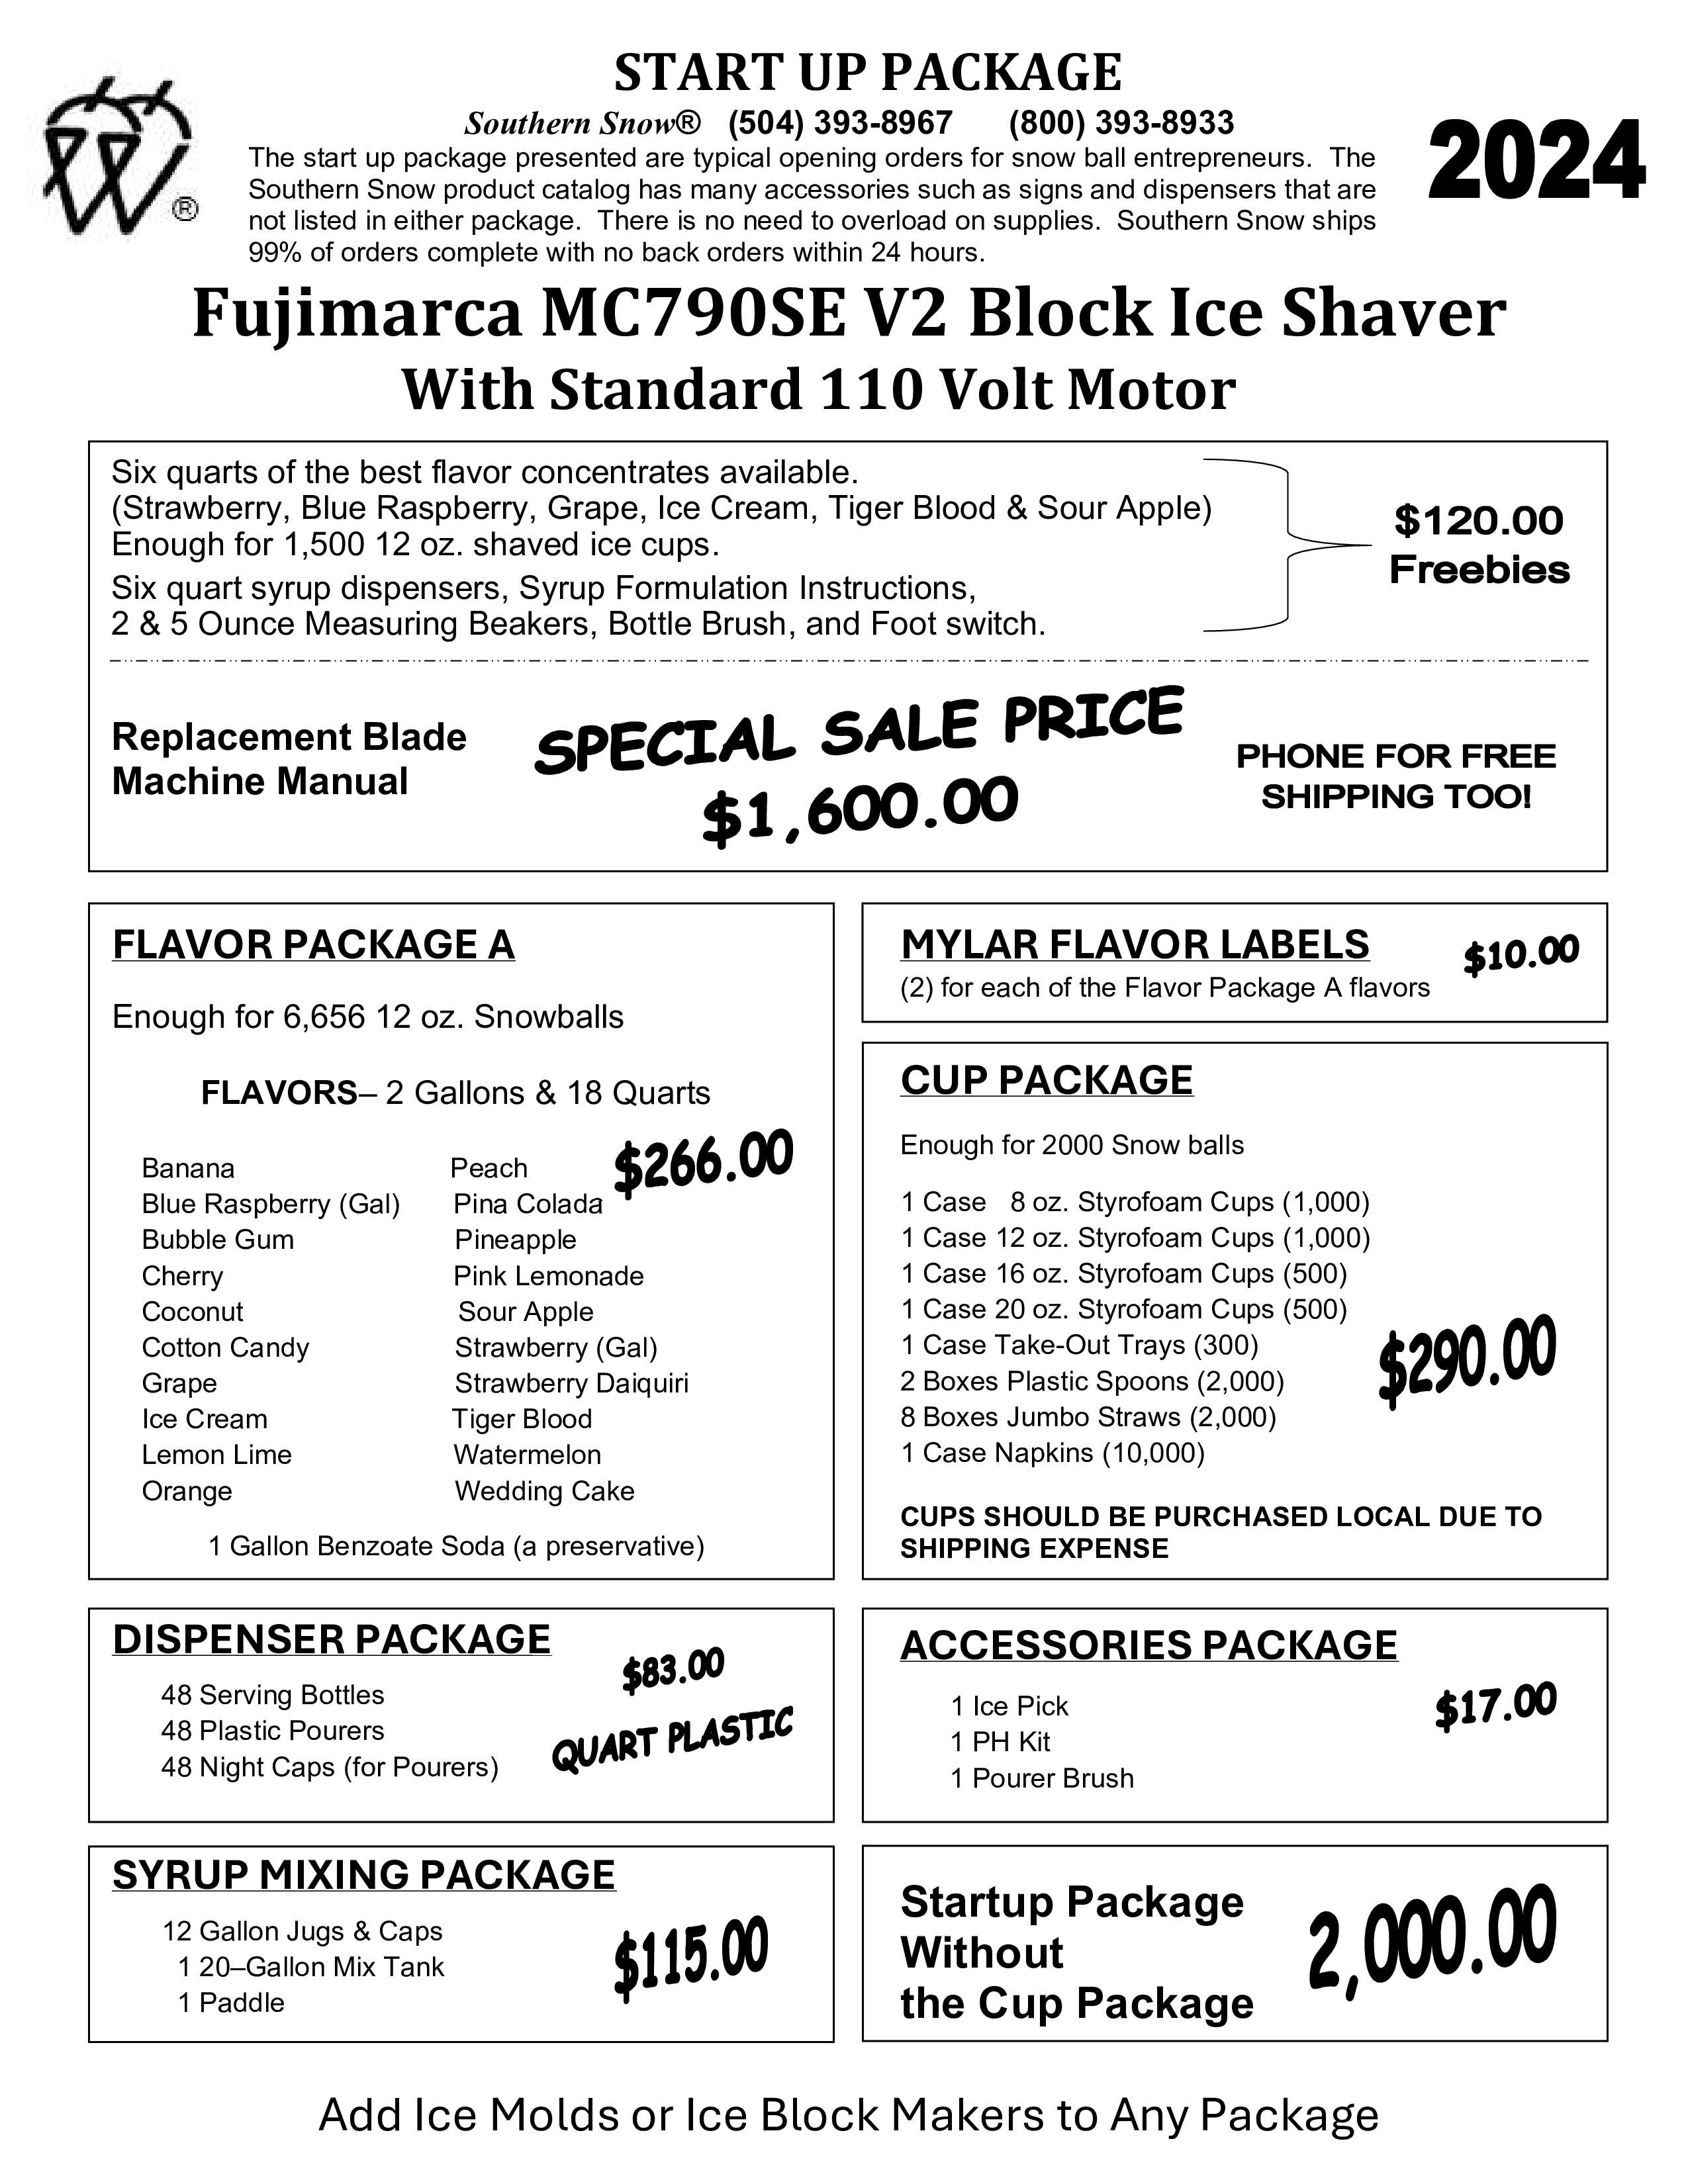 Fujimarca MC-709SE V2 Block Ice Shaver Start Up